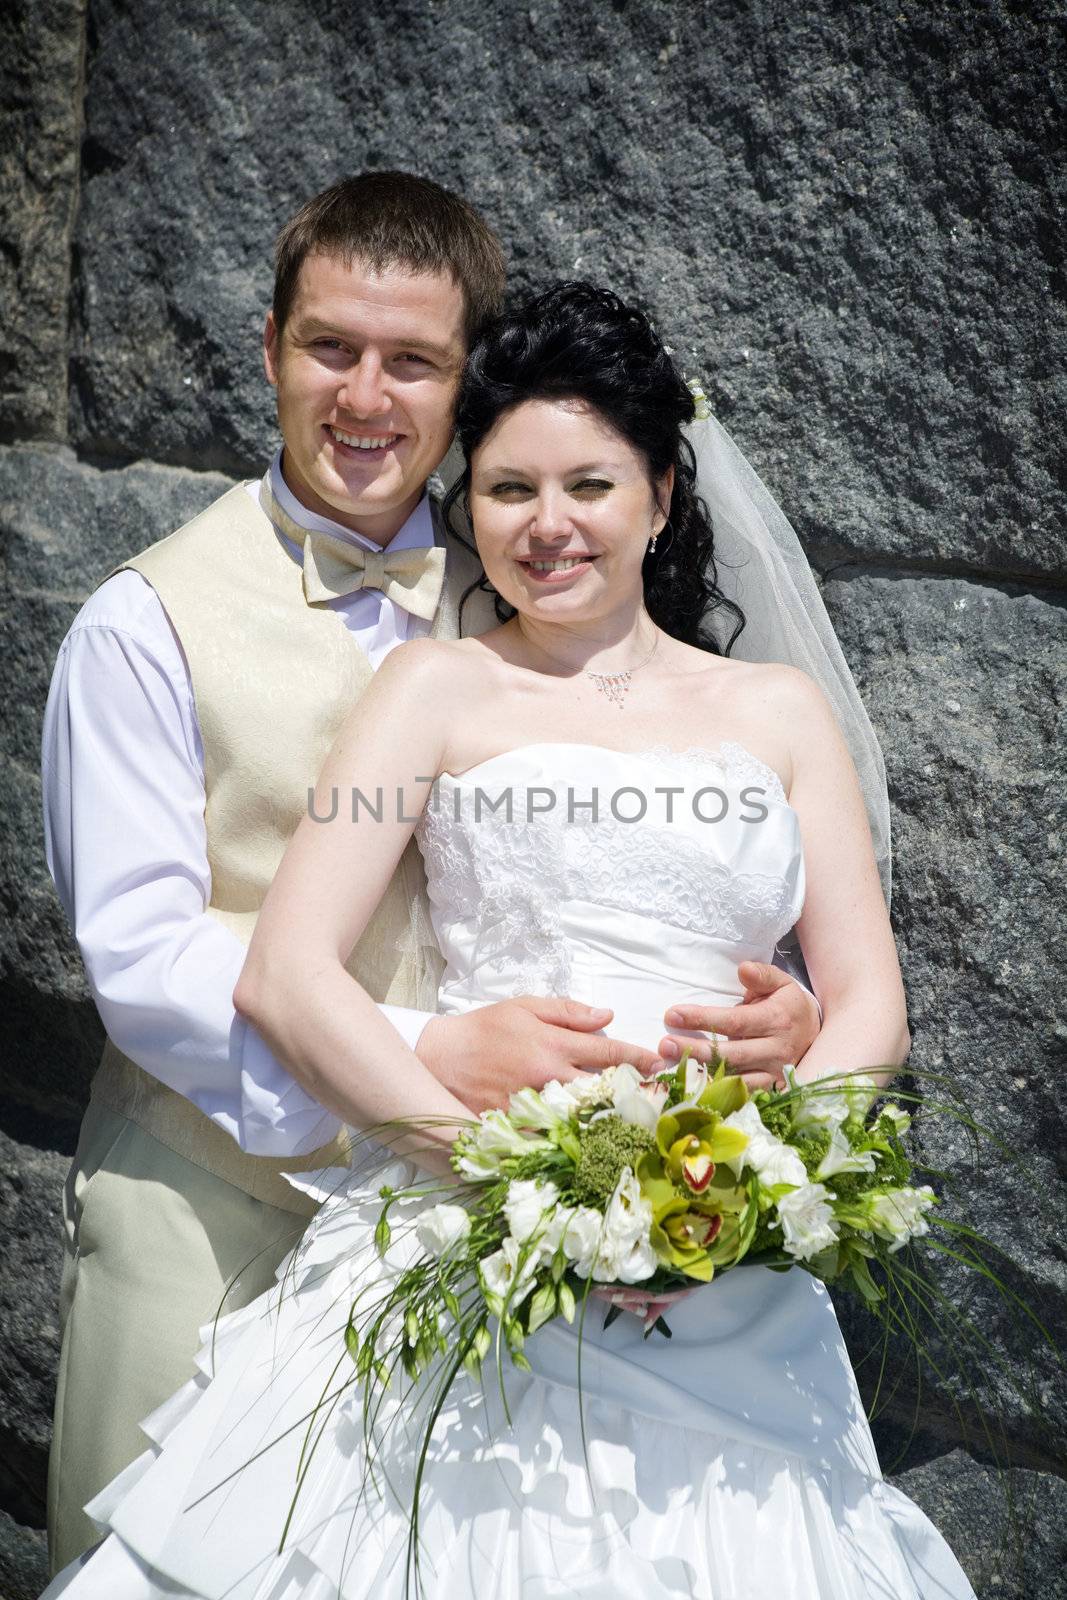 happy newl married couple near the stone wall